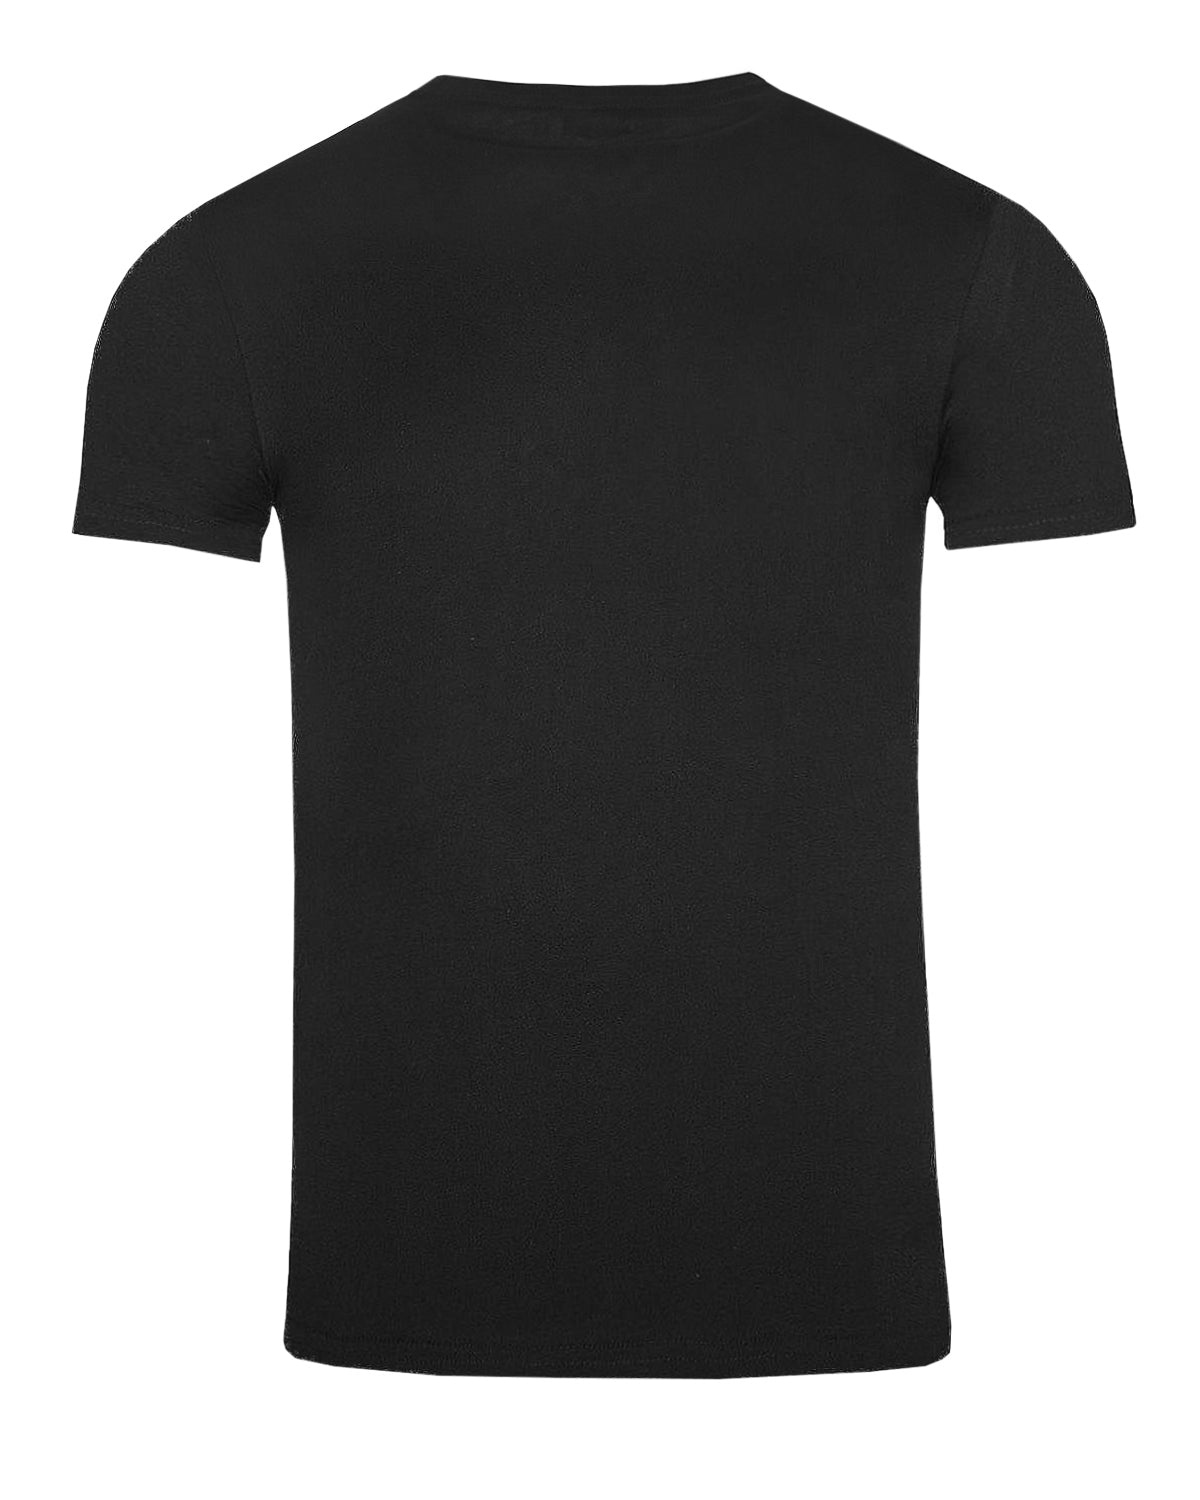 Print Shirt Misfit Garage t-paita - Musta